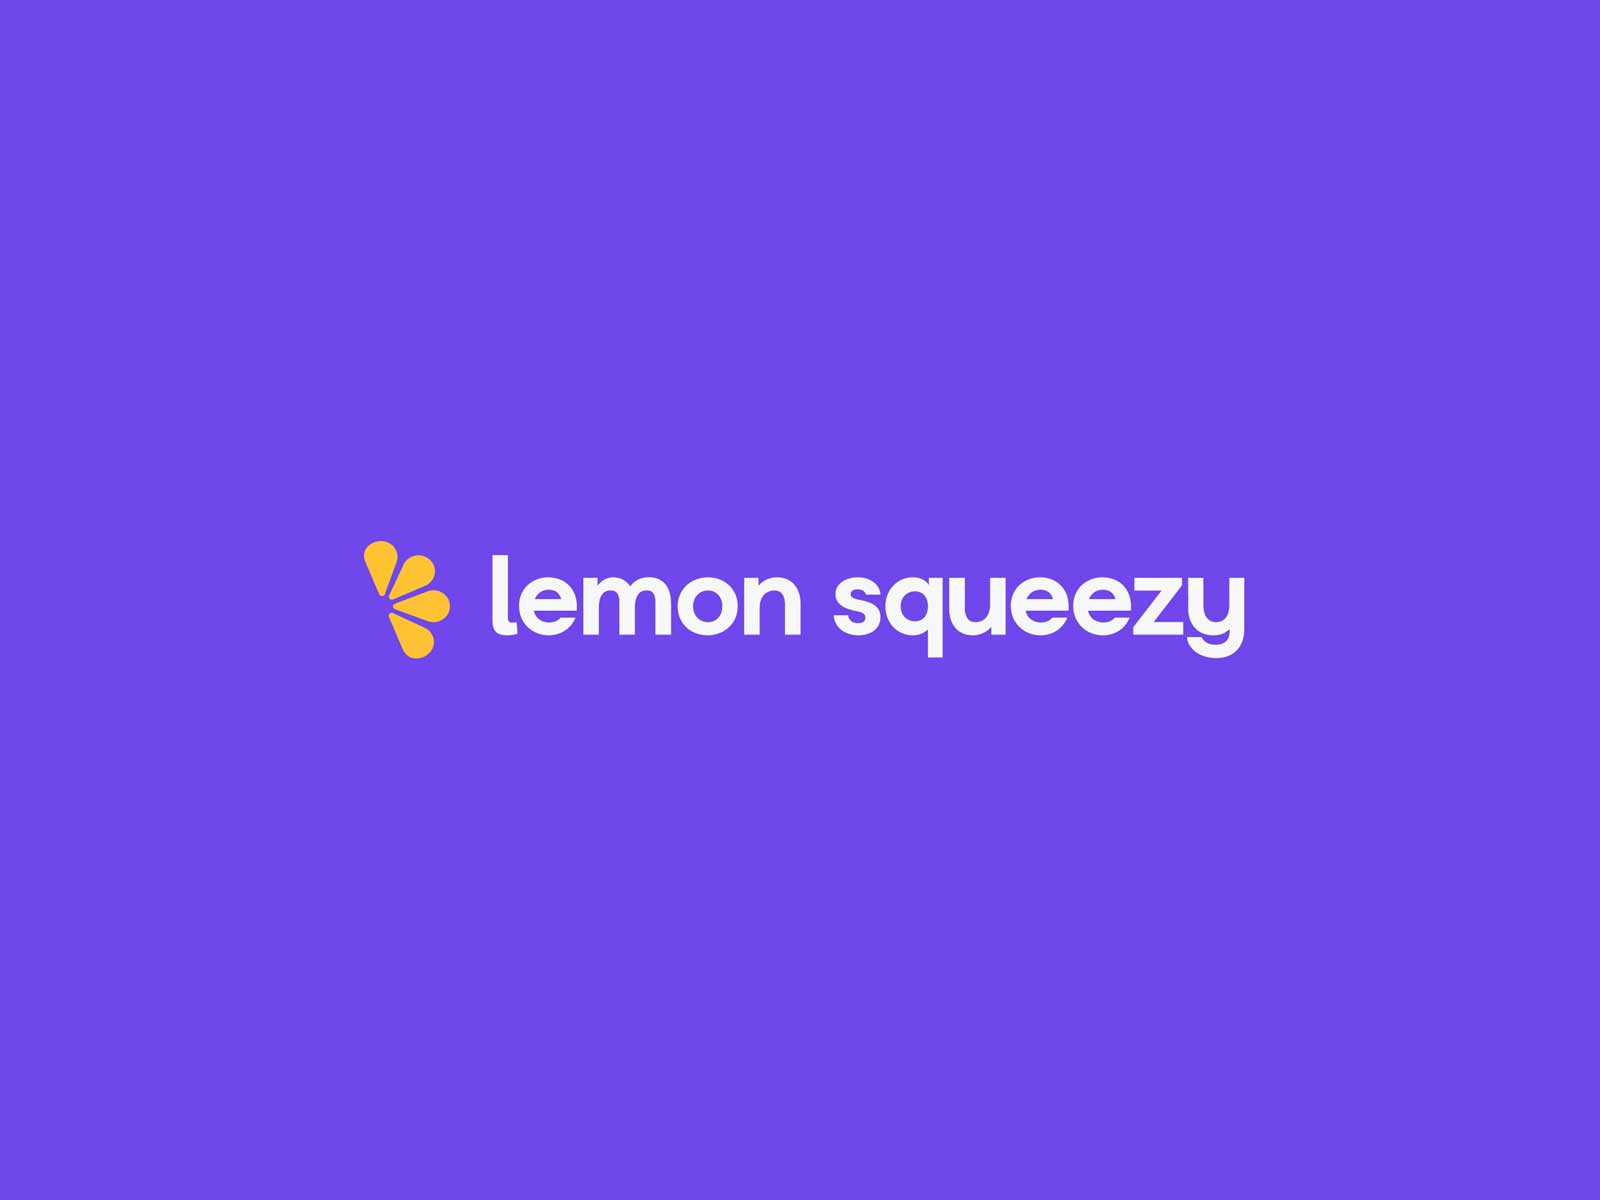 Lemonsqueezy